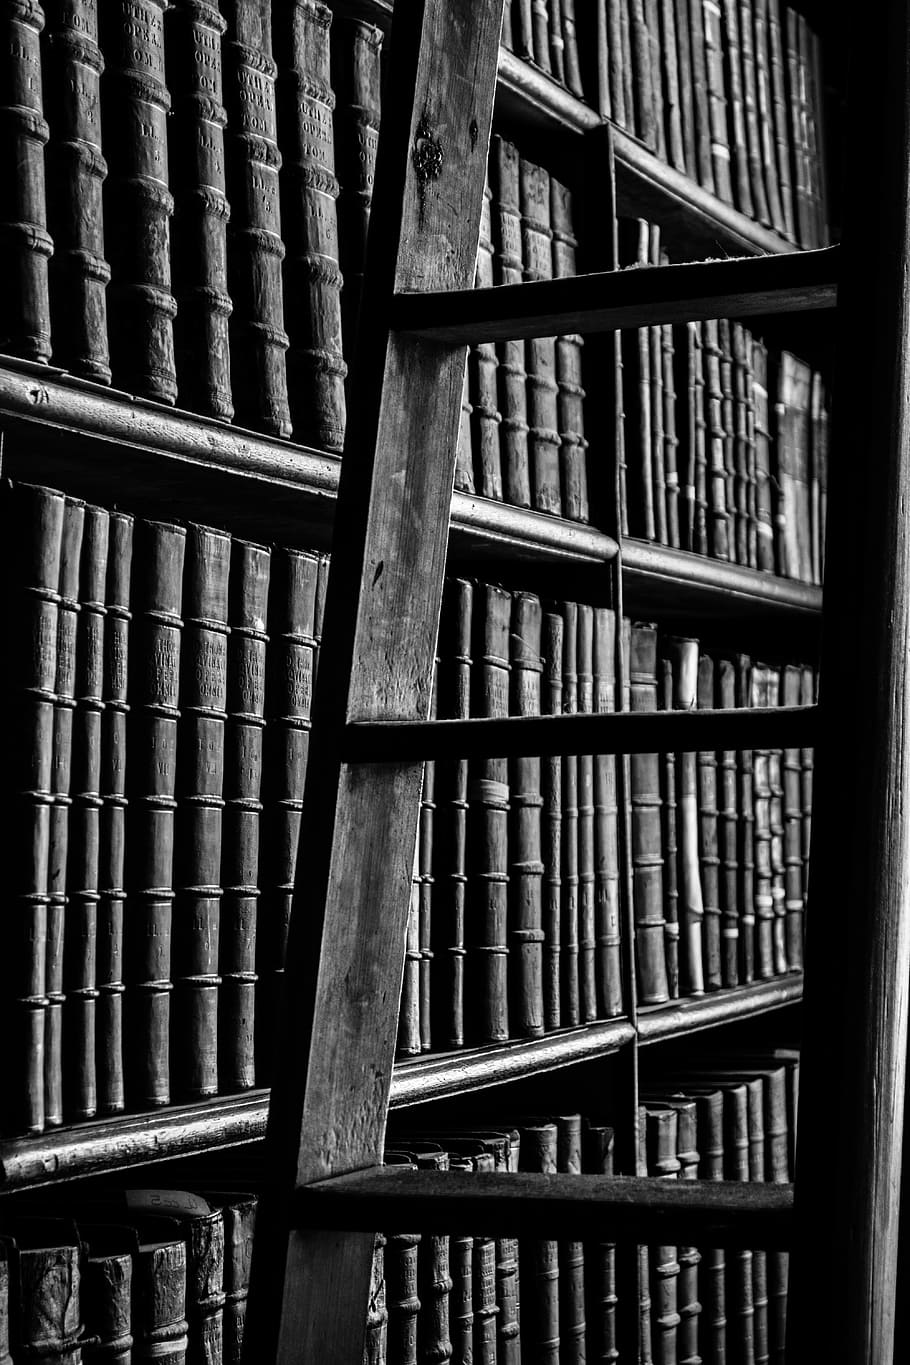 Hd Wallpaper Grayscale Photography Of Ladder Near Bookshelf